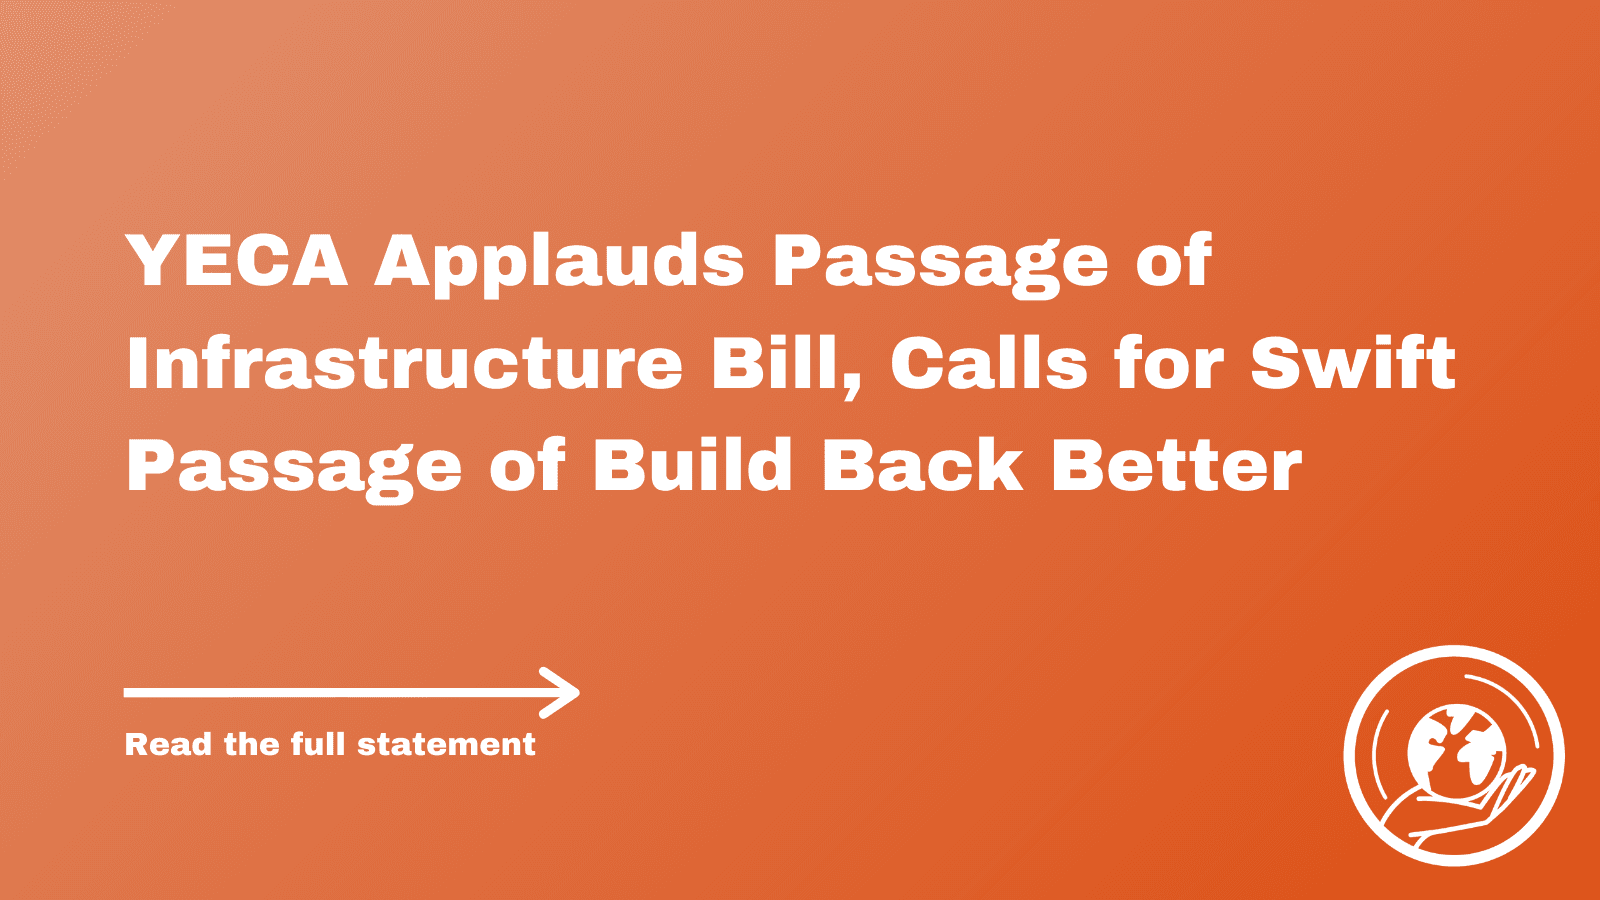 YECA Applauds Passage of Infrastructure Bill, Calls for Swift Passage of Build Back Better